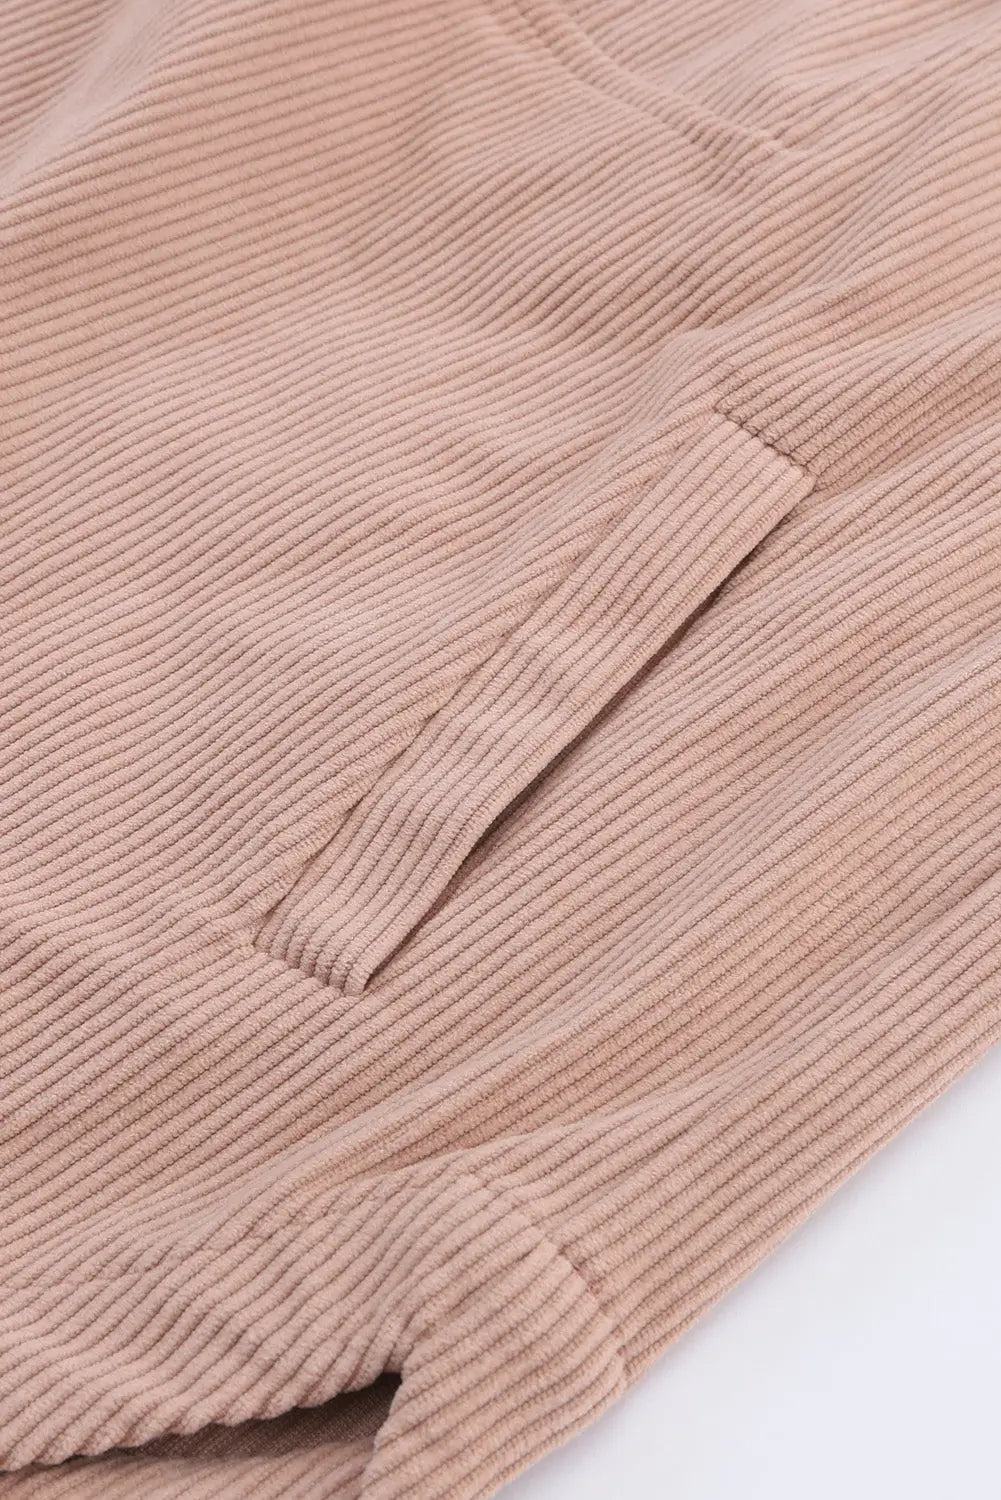 Apricot ribbed texture half zip collared sweatshirt - tops